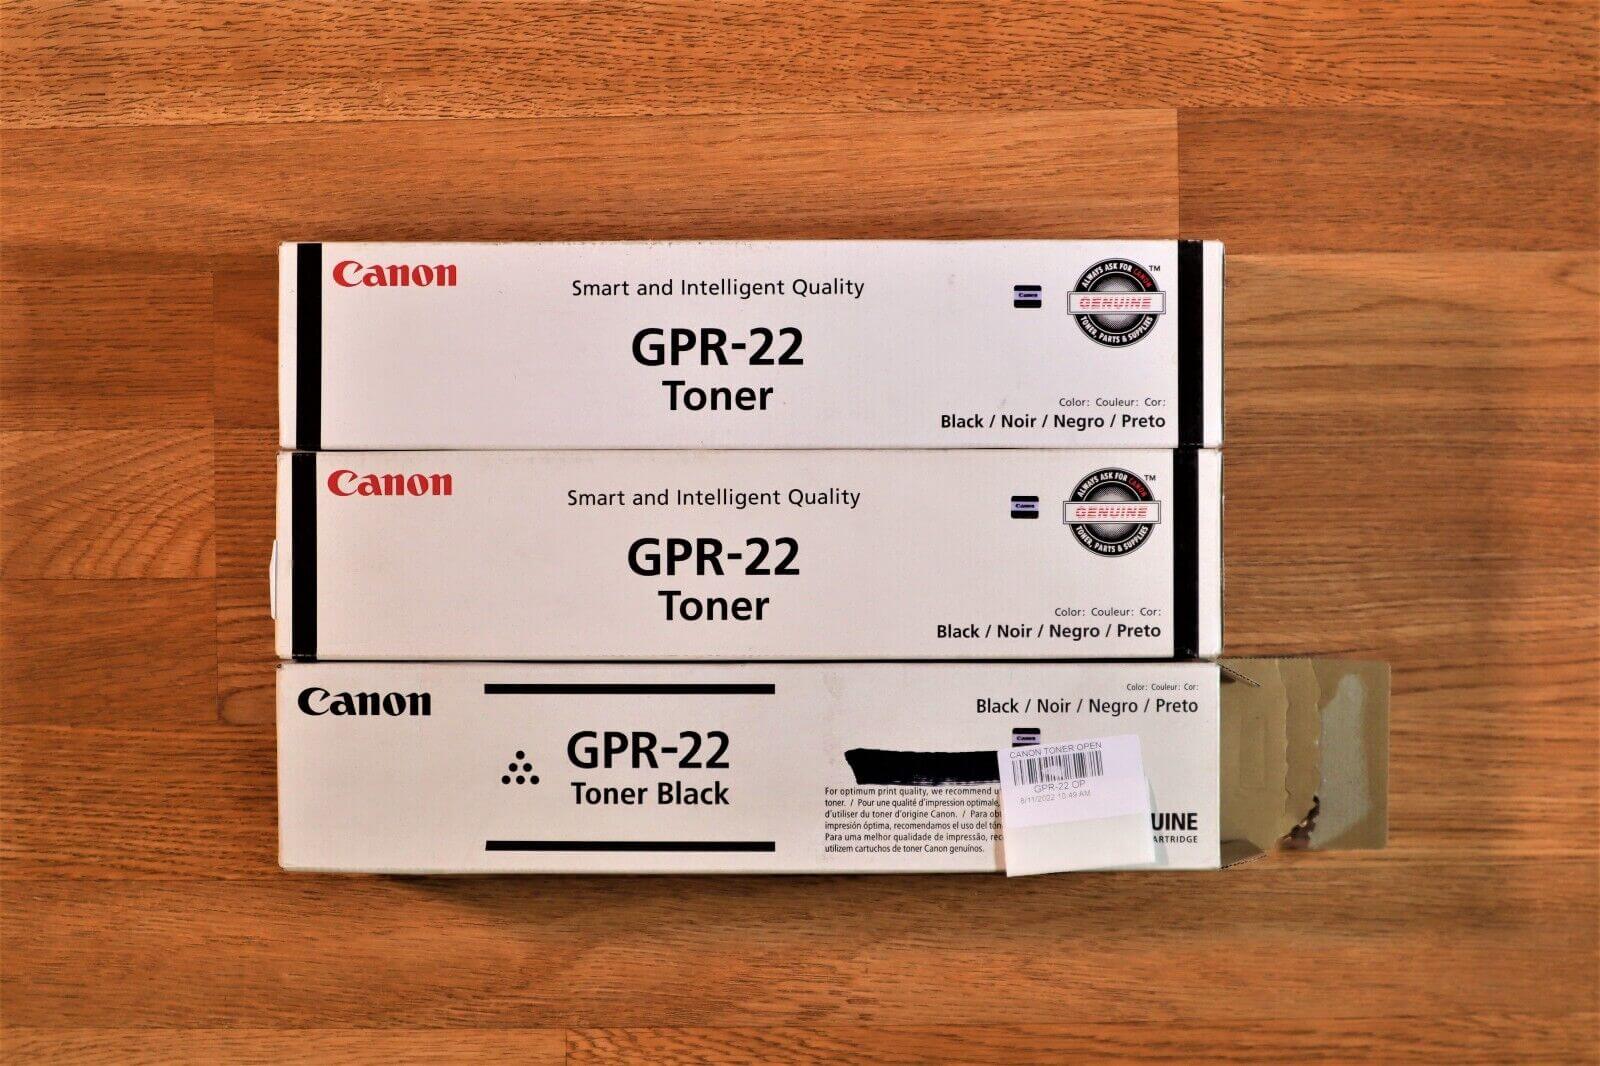 3 Canon GPR-22 Black Toner iR 1018/1019/1020/1021/1022/1023/1024/1025 - Same Day - copier-clearance-center